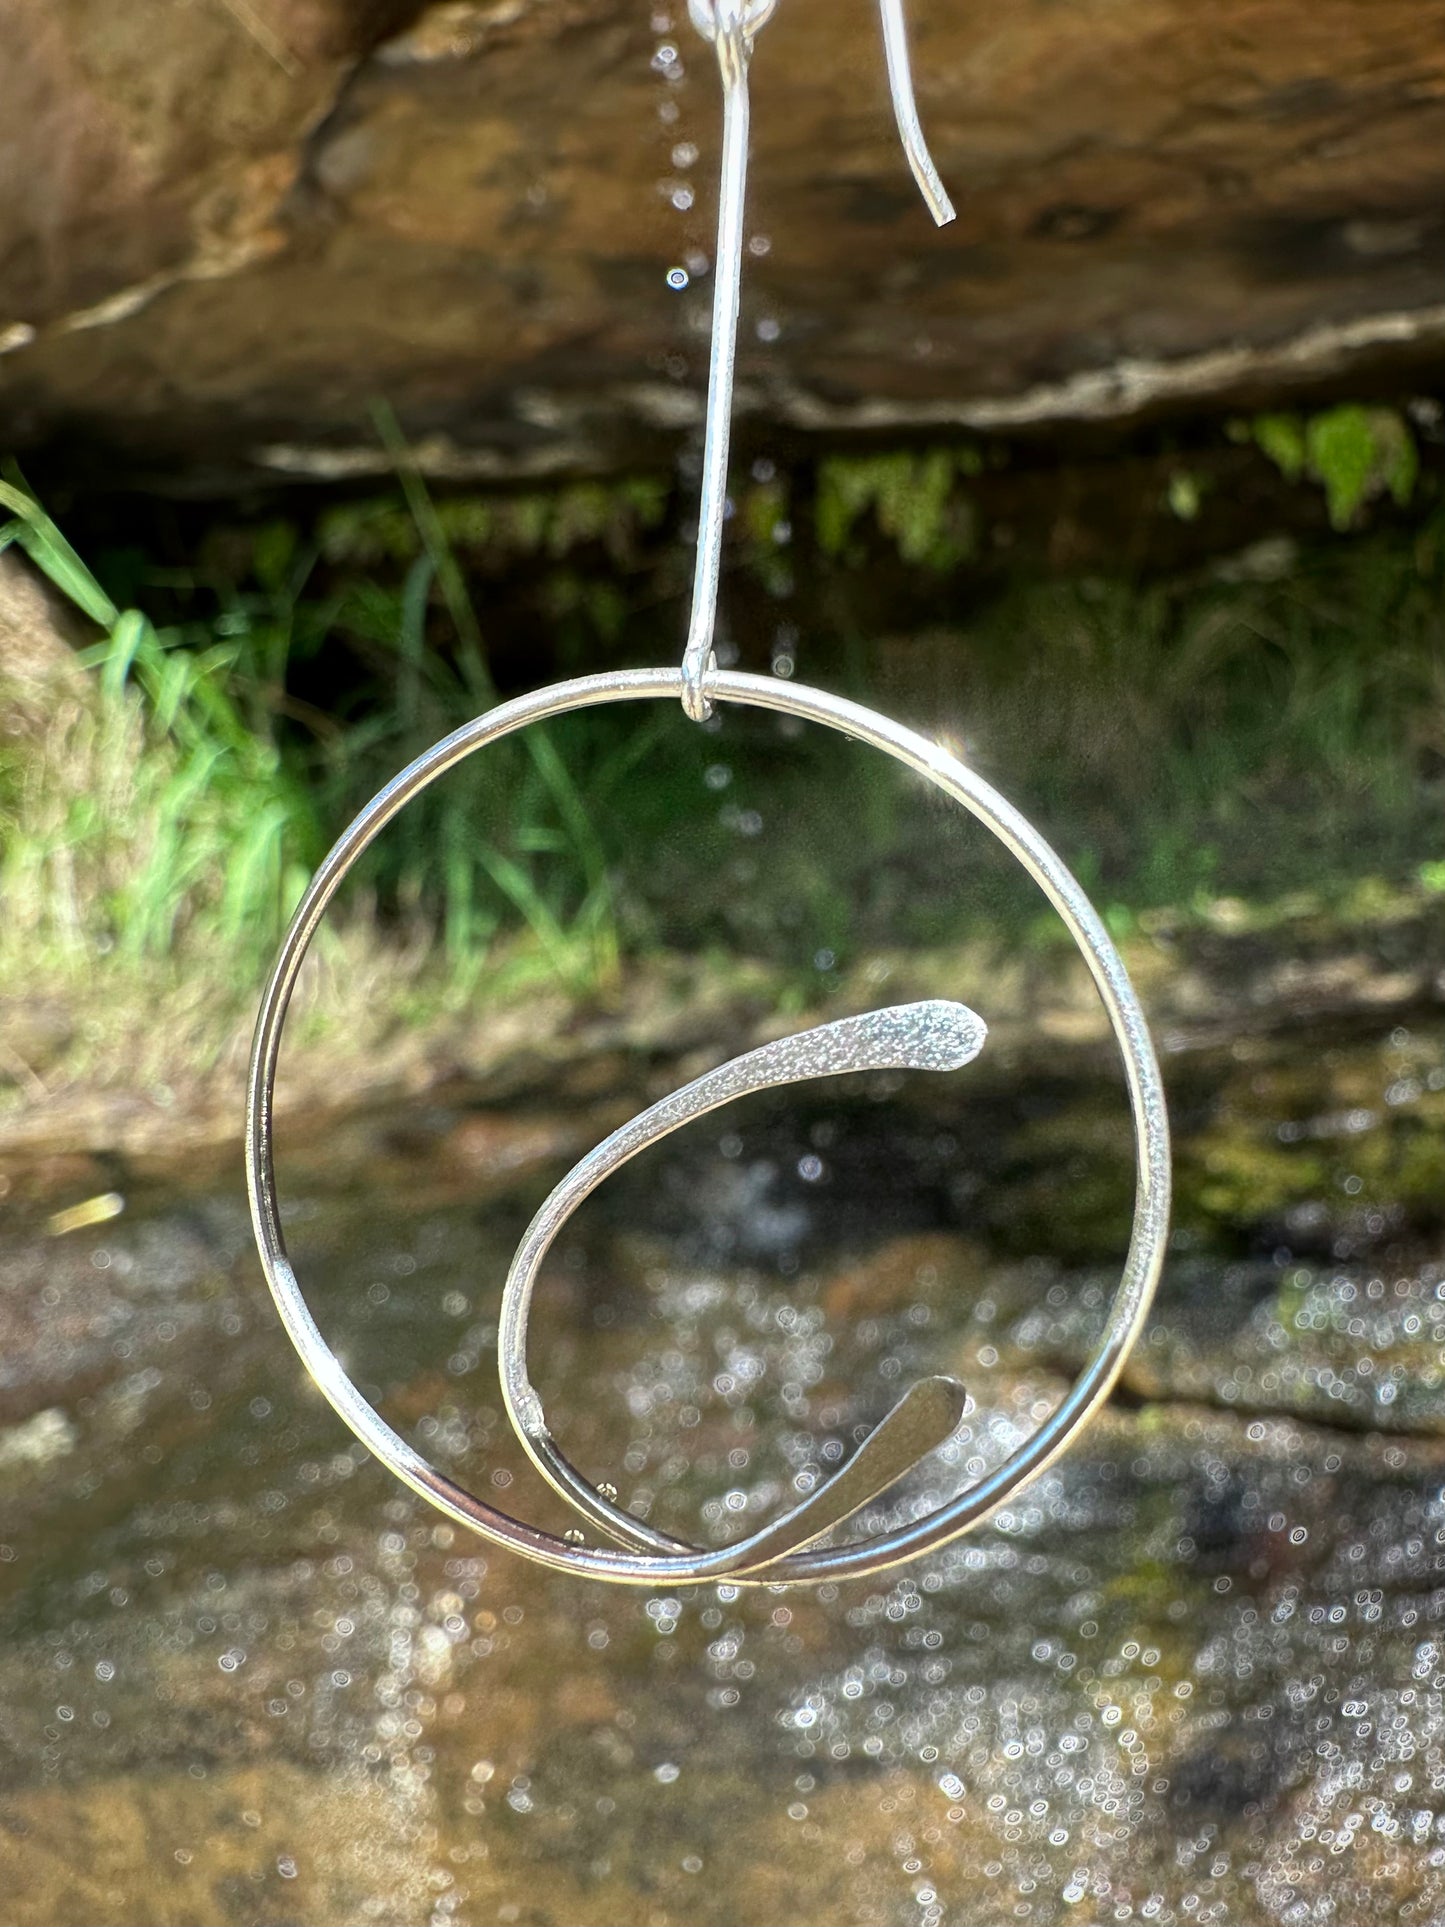 Tulin drop earrings, hammered silver earrings, close-up silver earrings waterfall